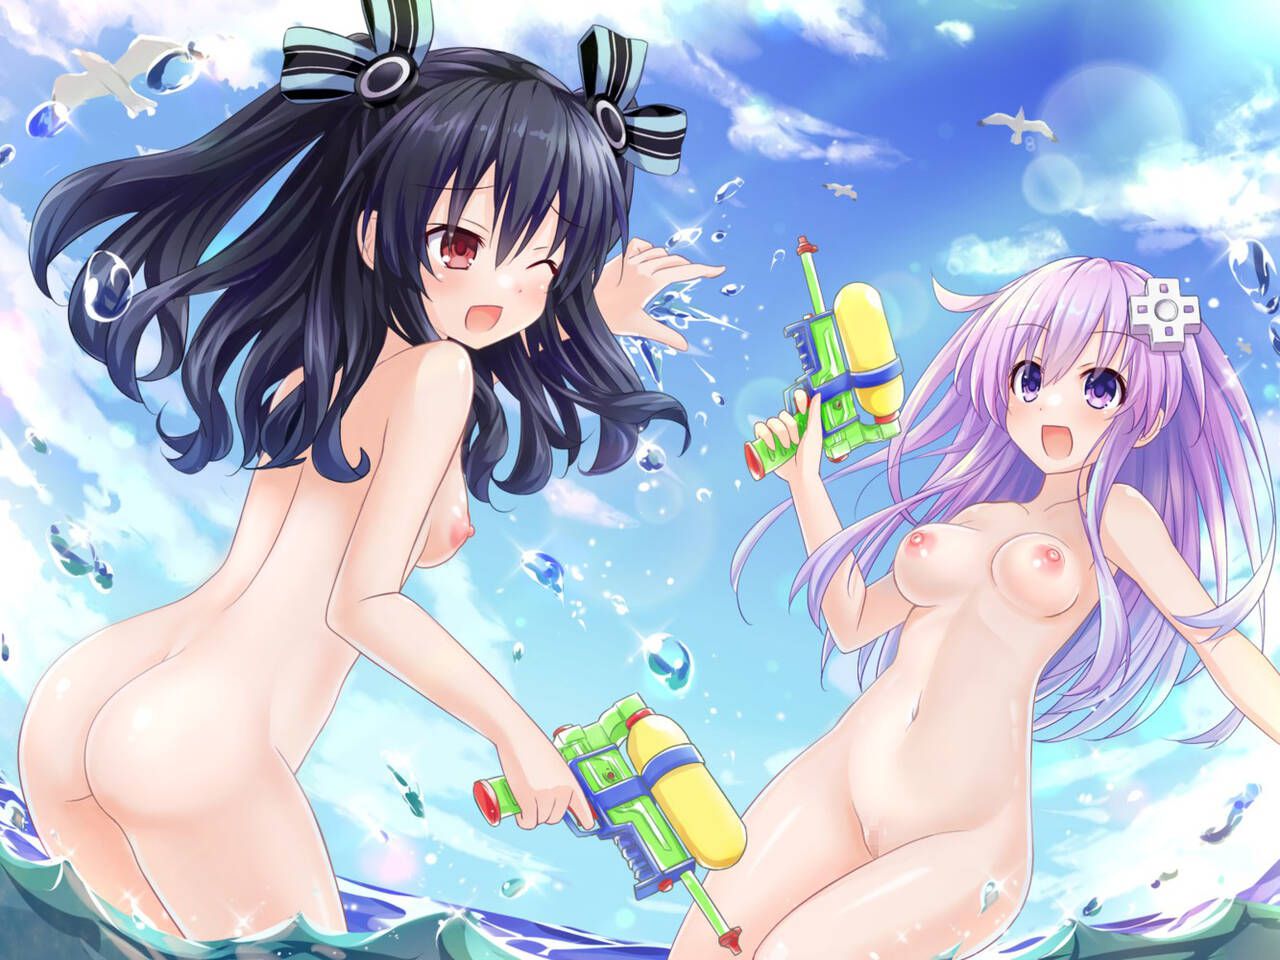 [Naked Kora] Let's change the official anime illustration to erotic illustrations Part 2 27